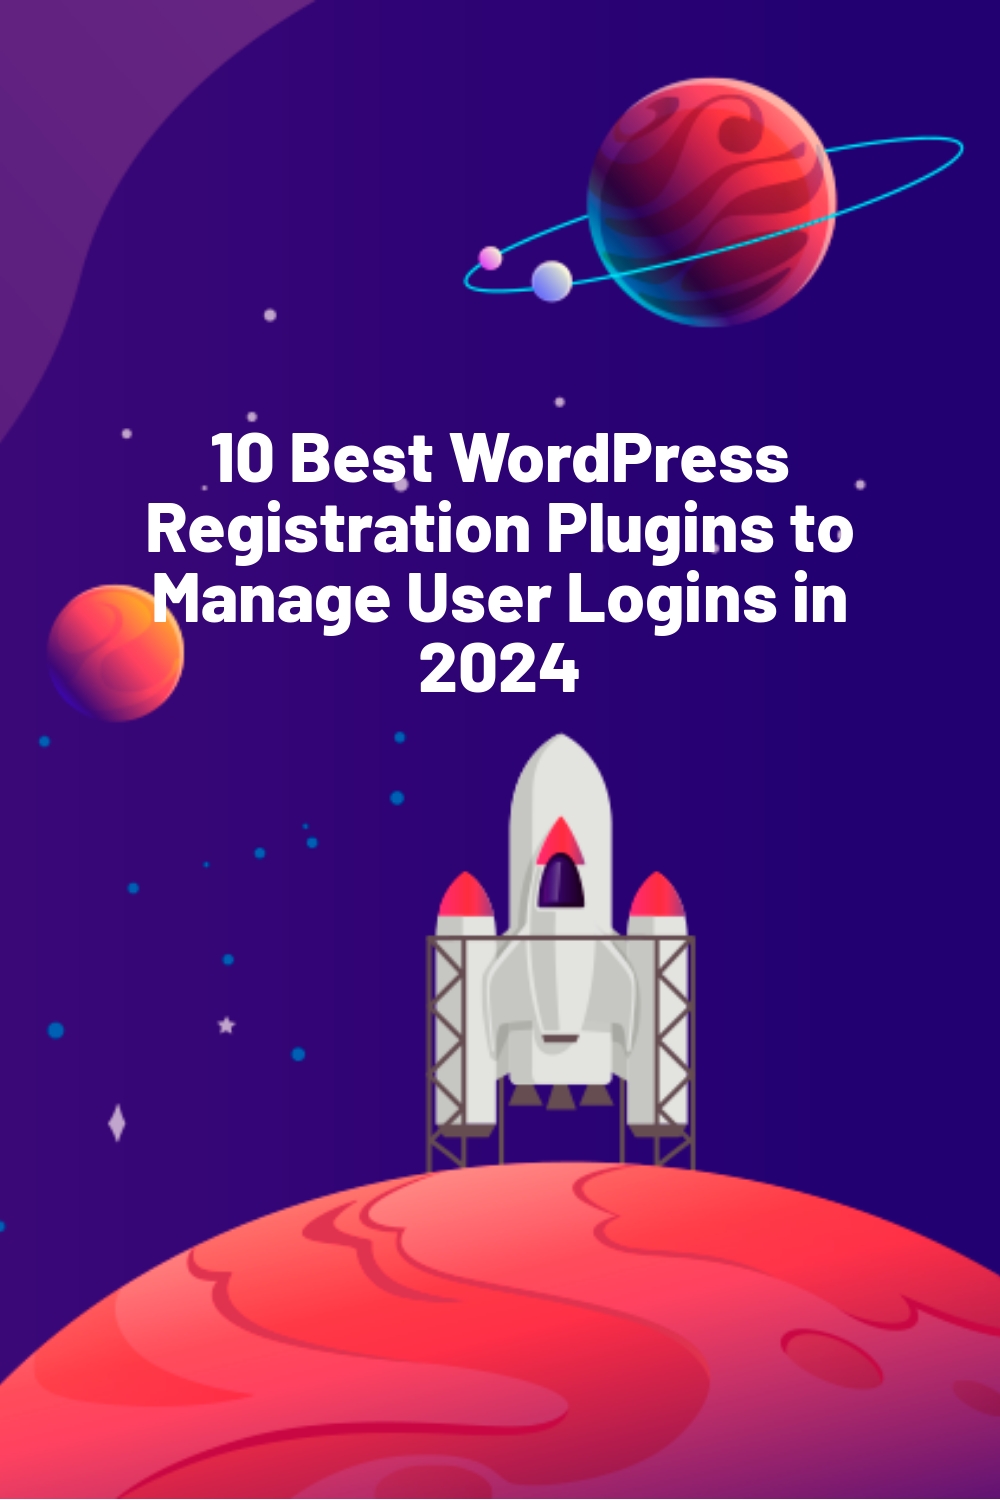 10 Best WordPress Registration Plugins to Manage User Logins in 2024